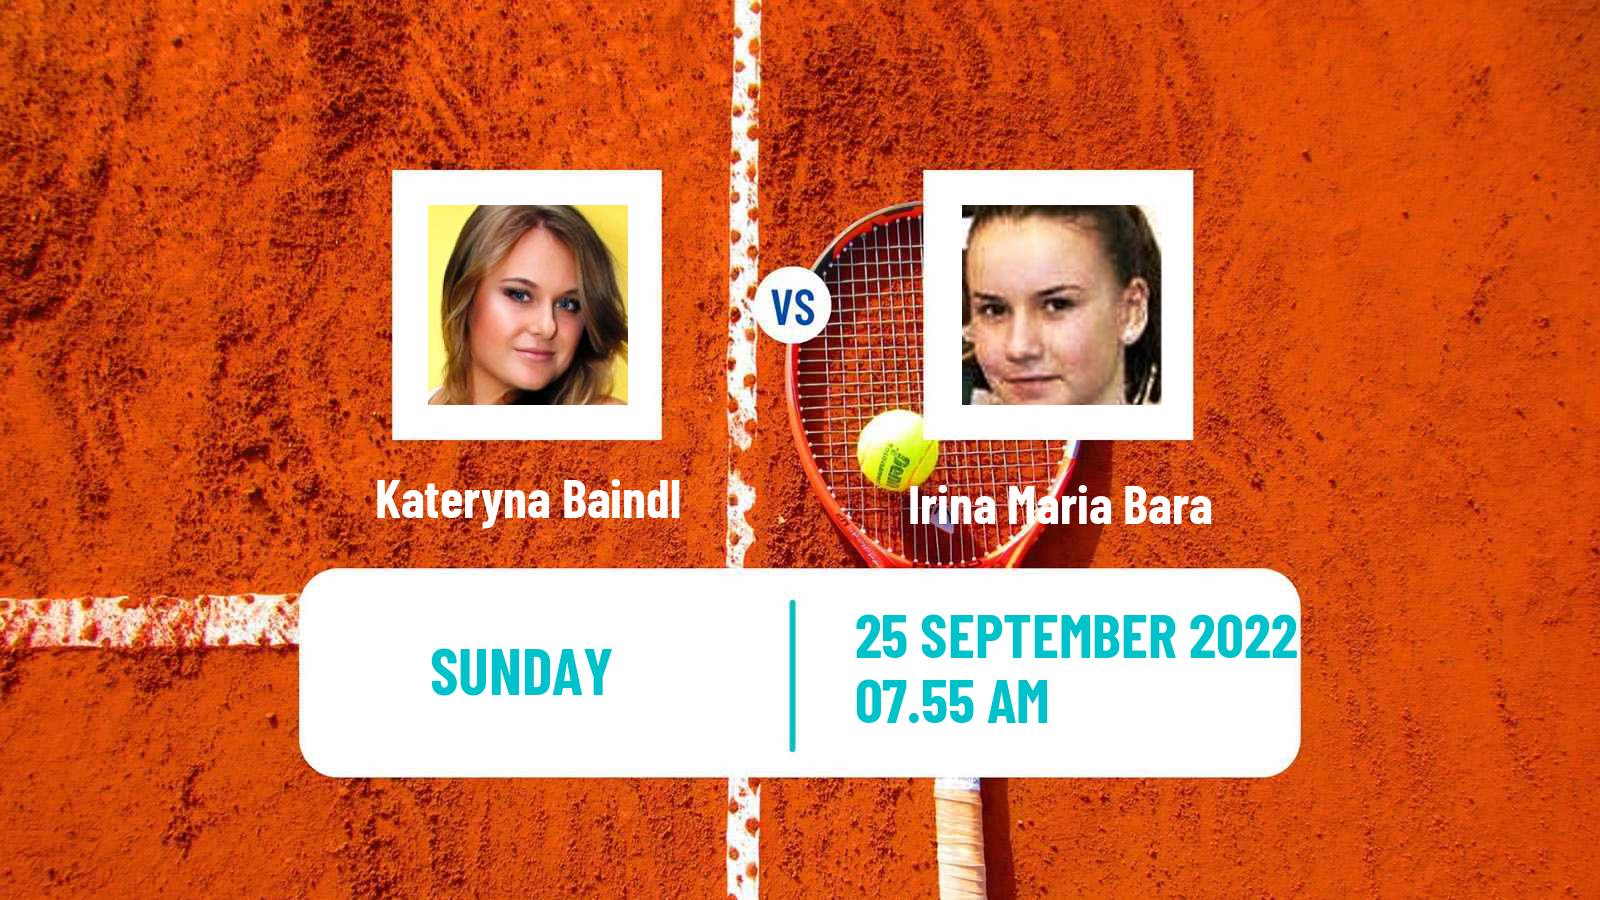 Tennis WTA Parma Kateryna Baindl - Irina Maria Bara